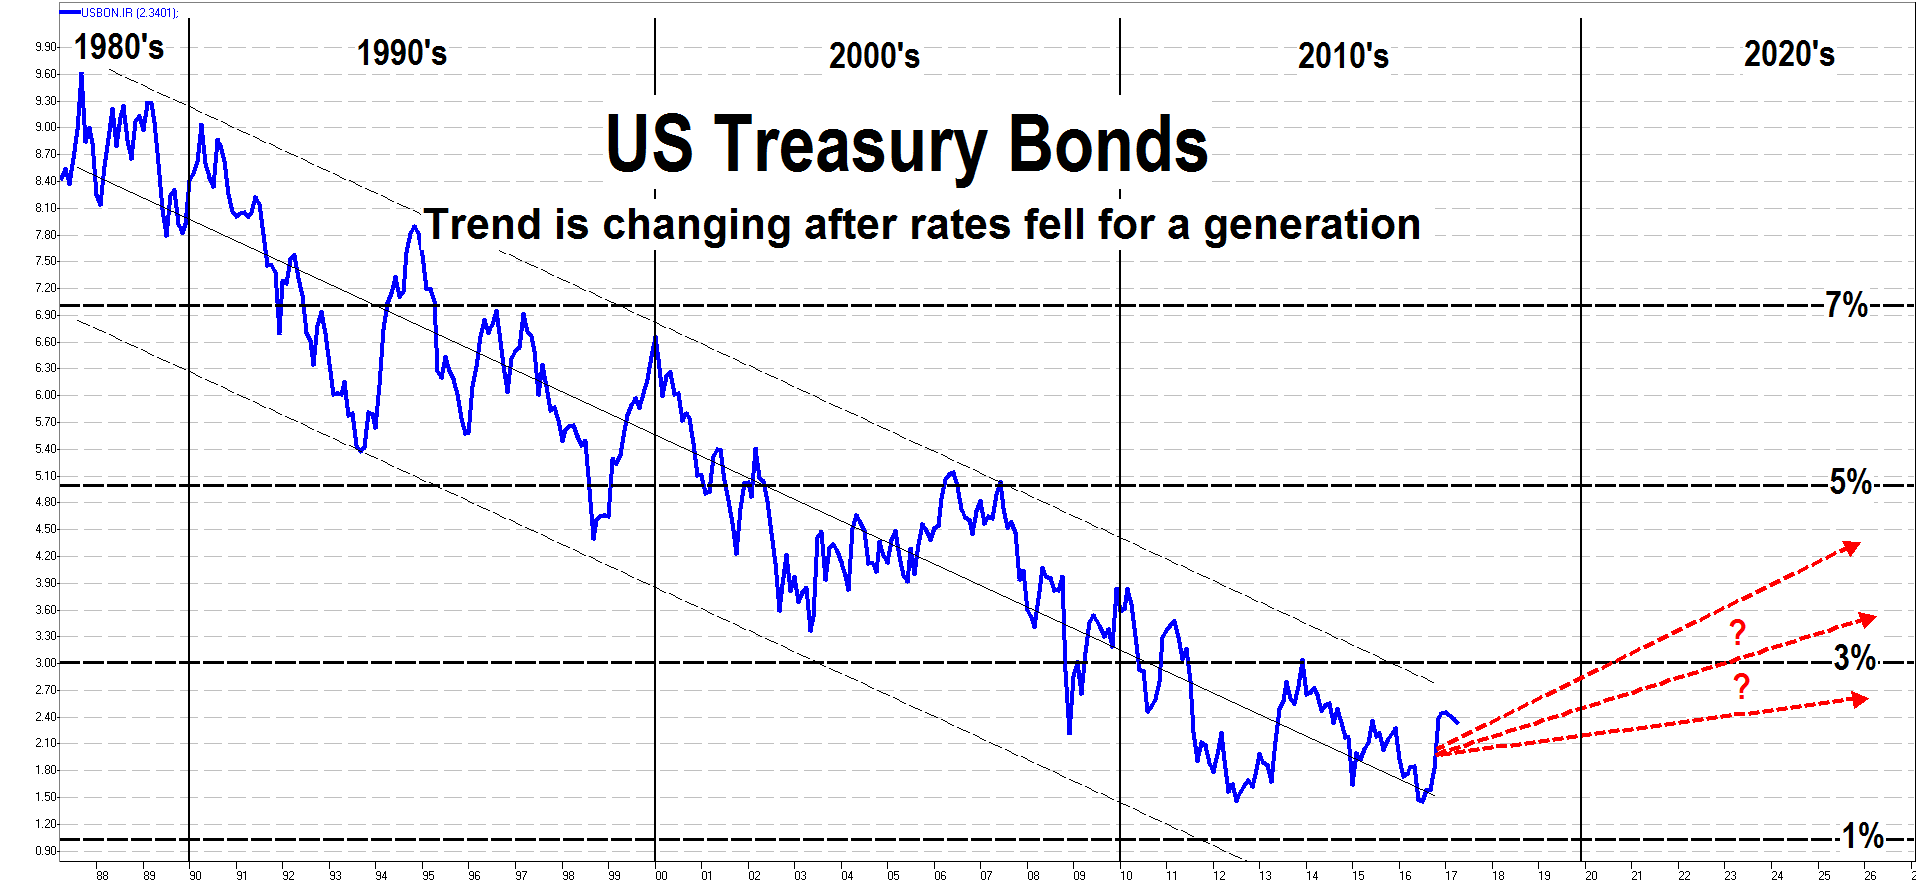 US Treasury Bonds